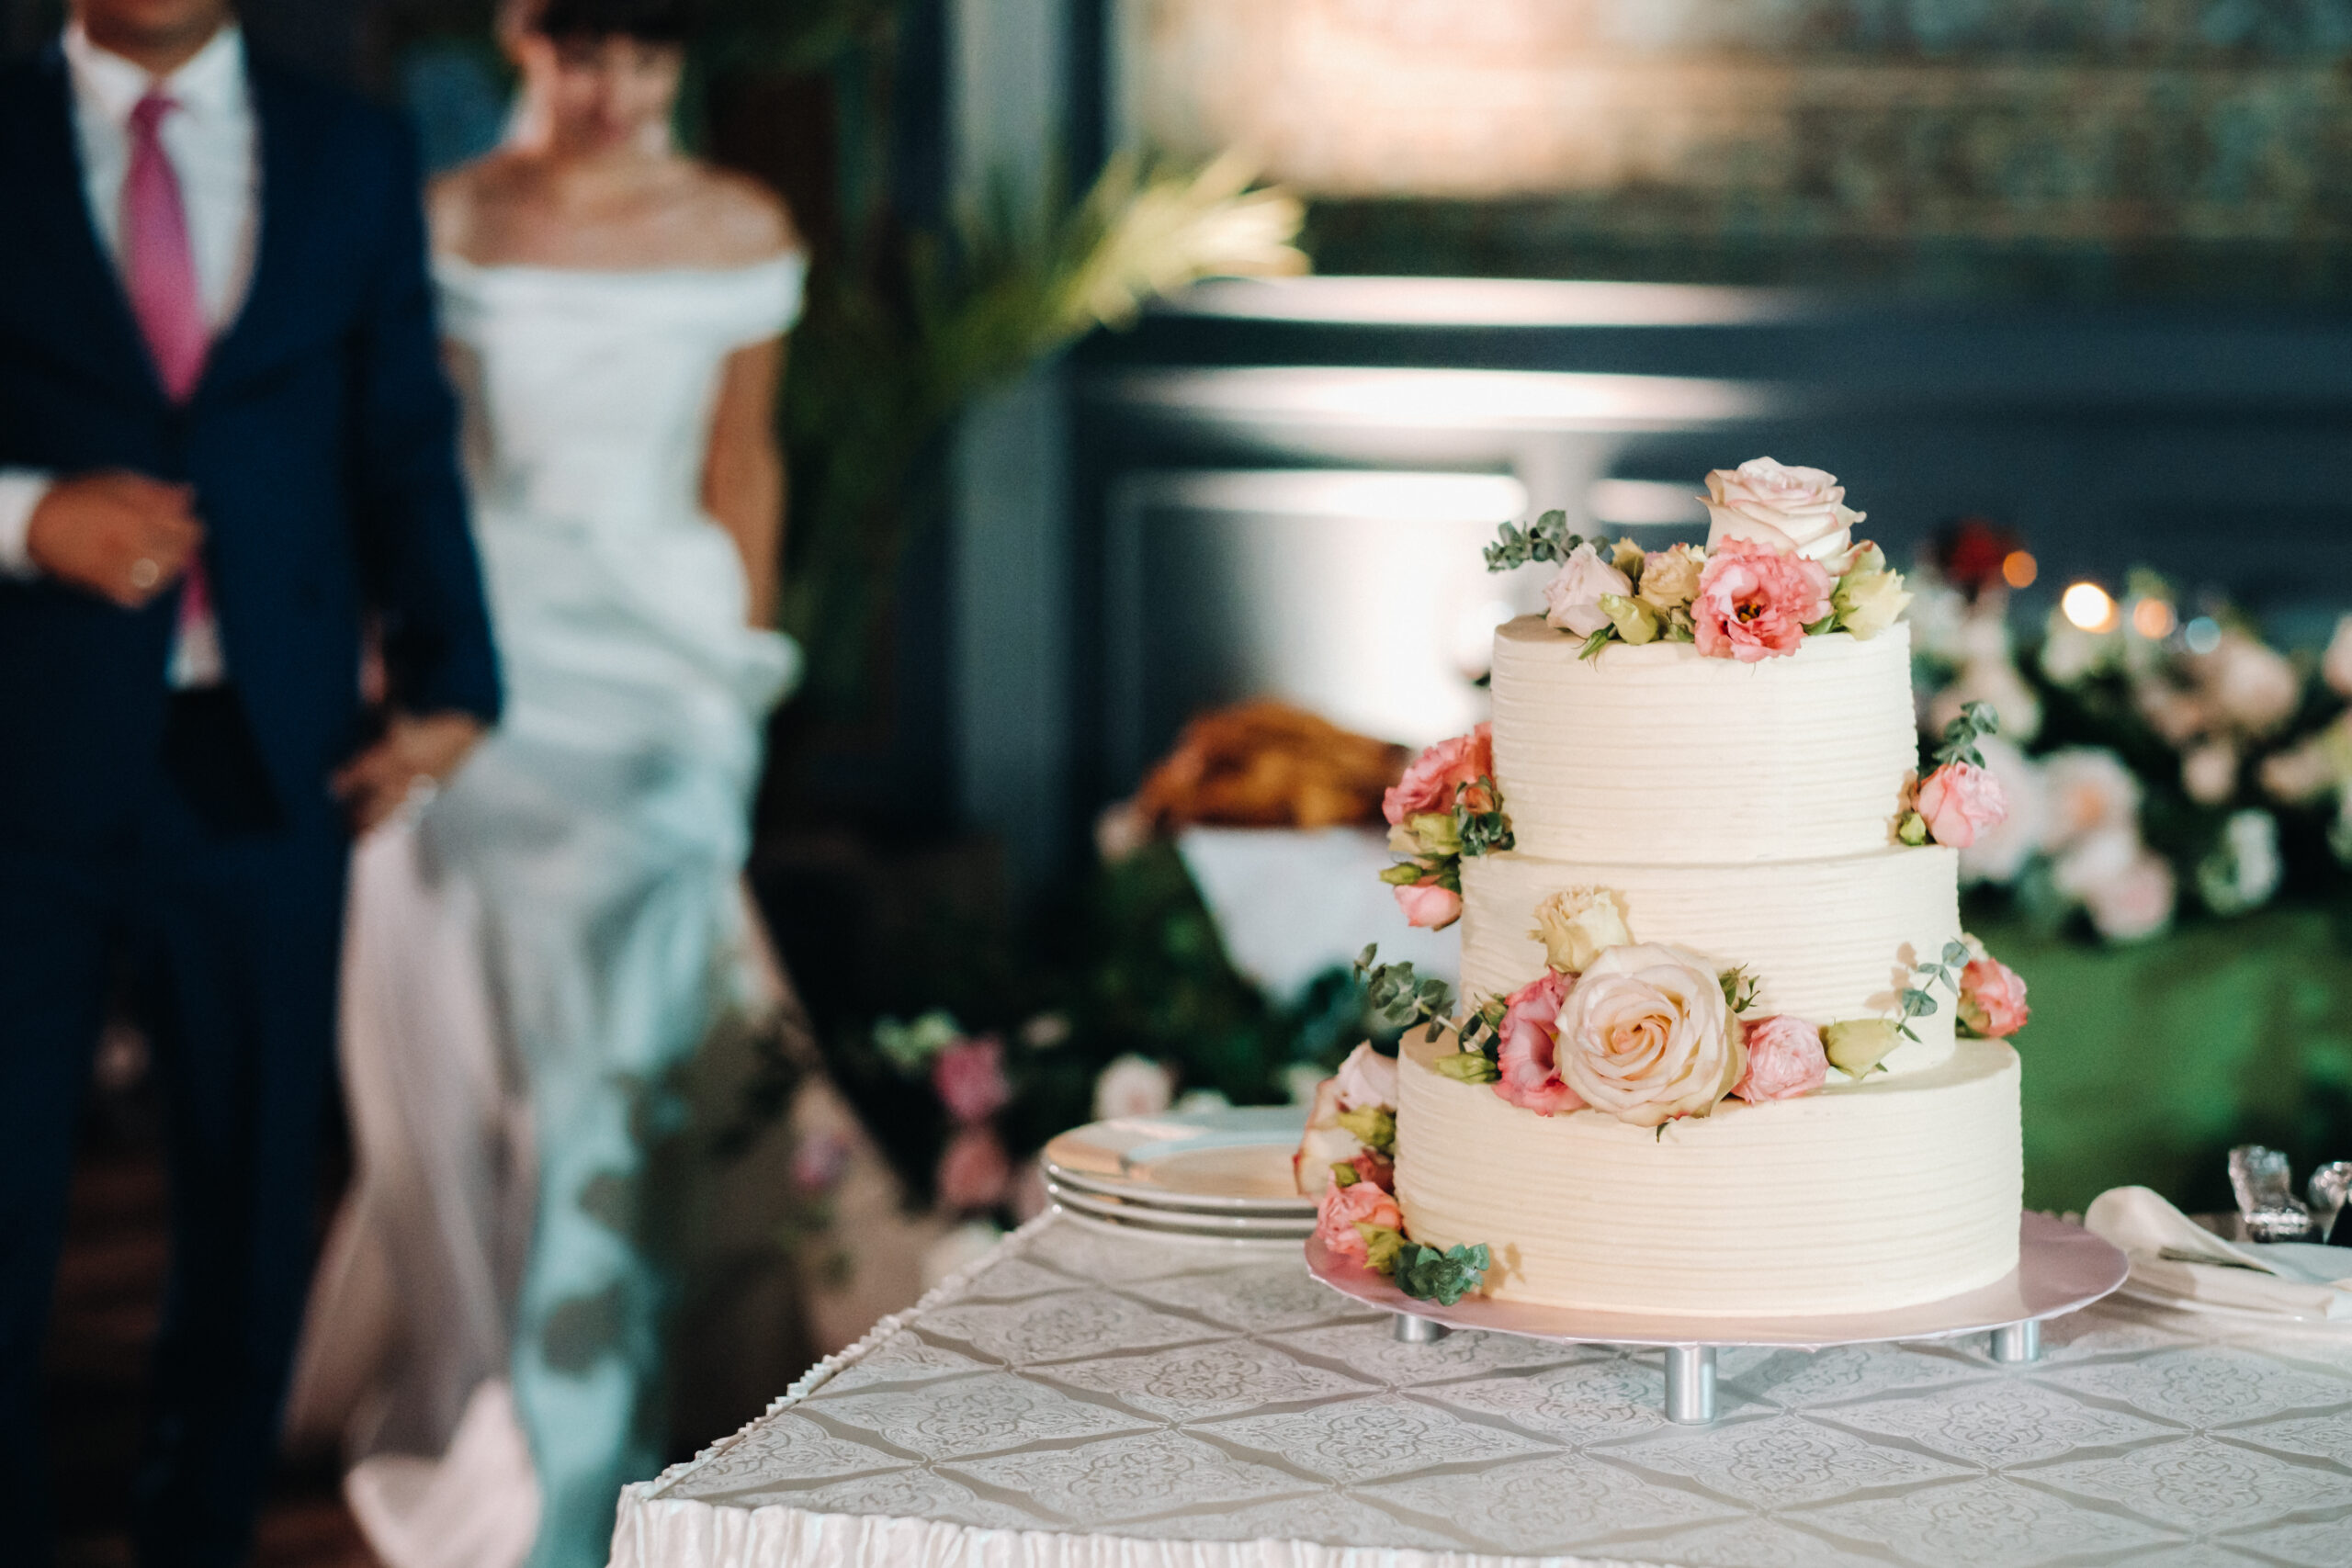 Elegant-wedding-cake-at-the-wedding-in-three-tiers-T428H8K-scaled.jpg